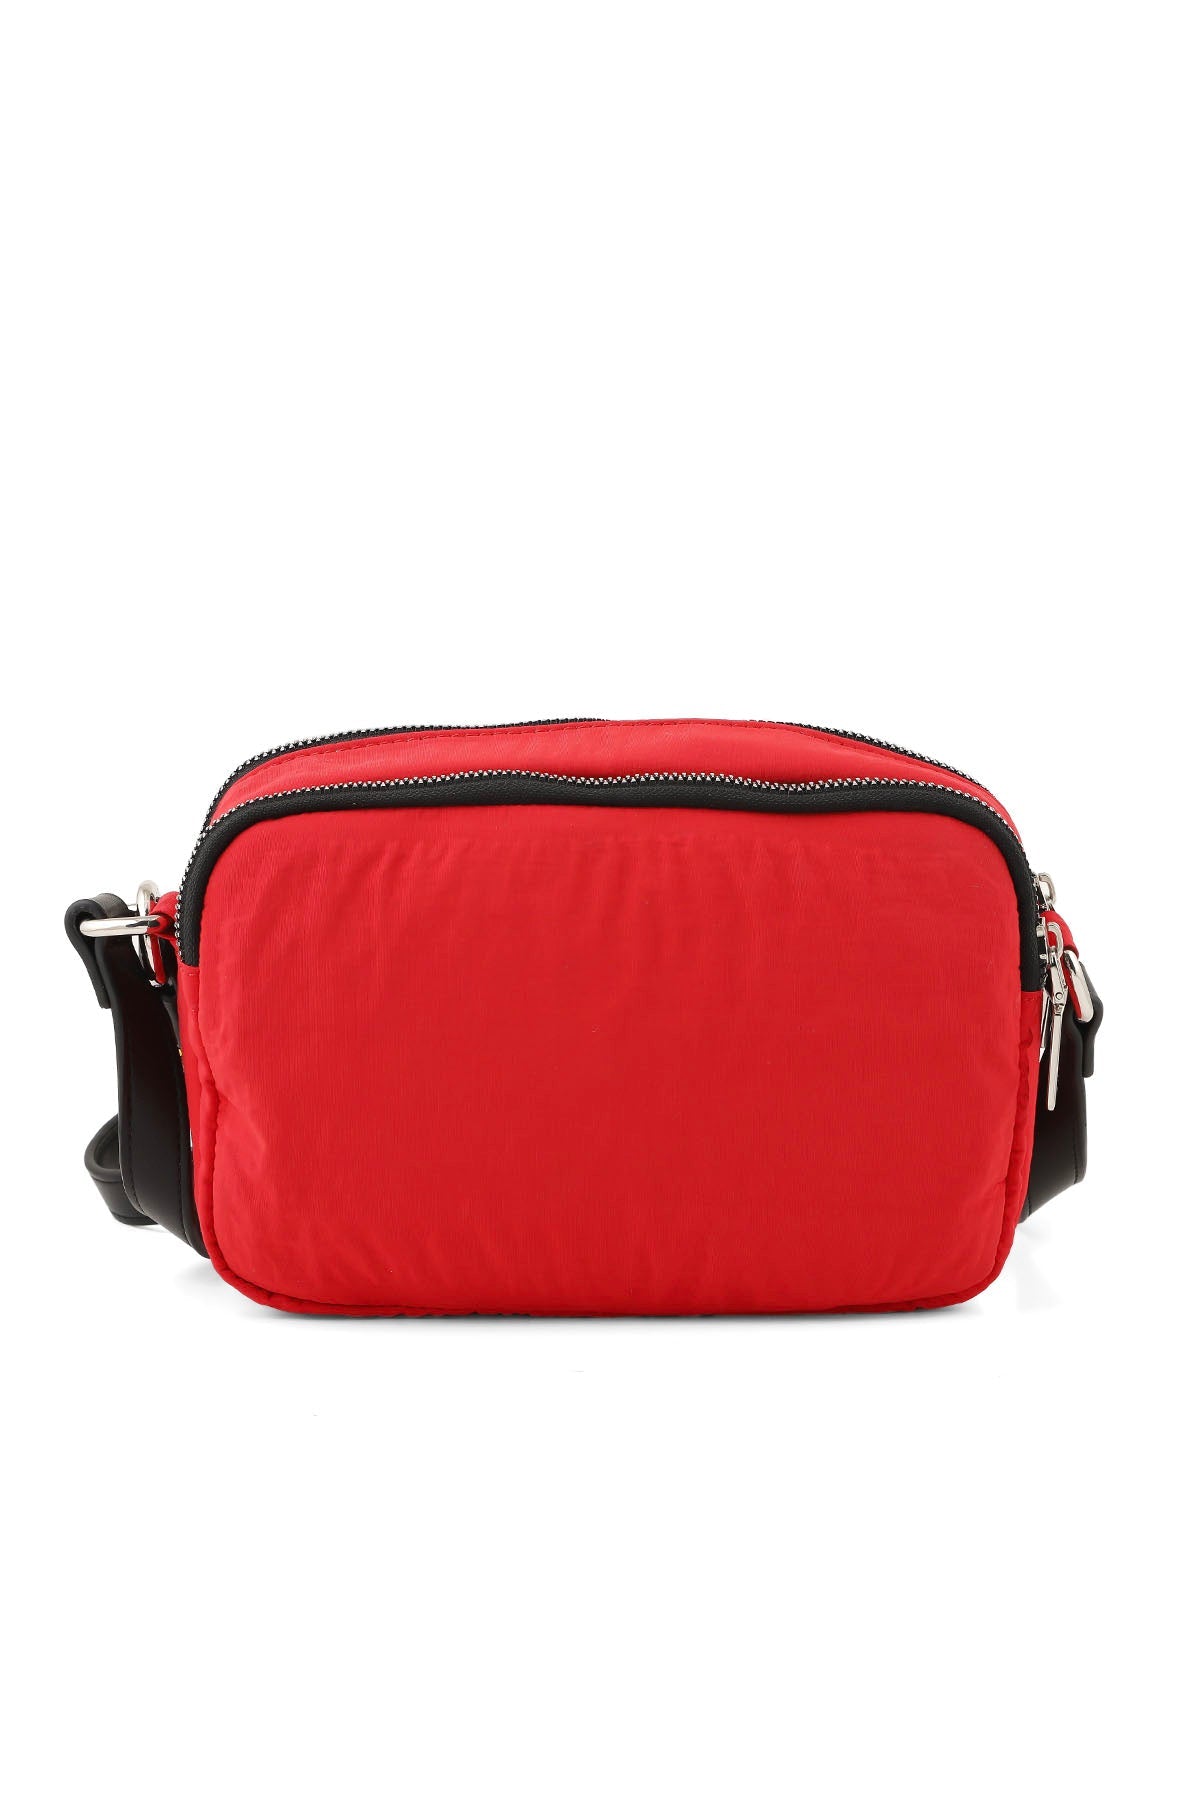 Cross Shoulder Bags B15014-Red